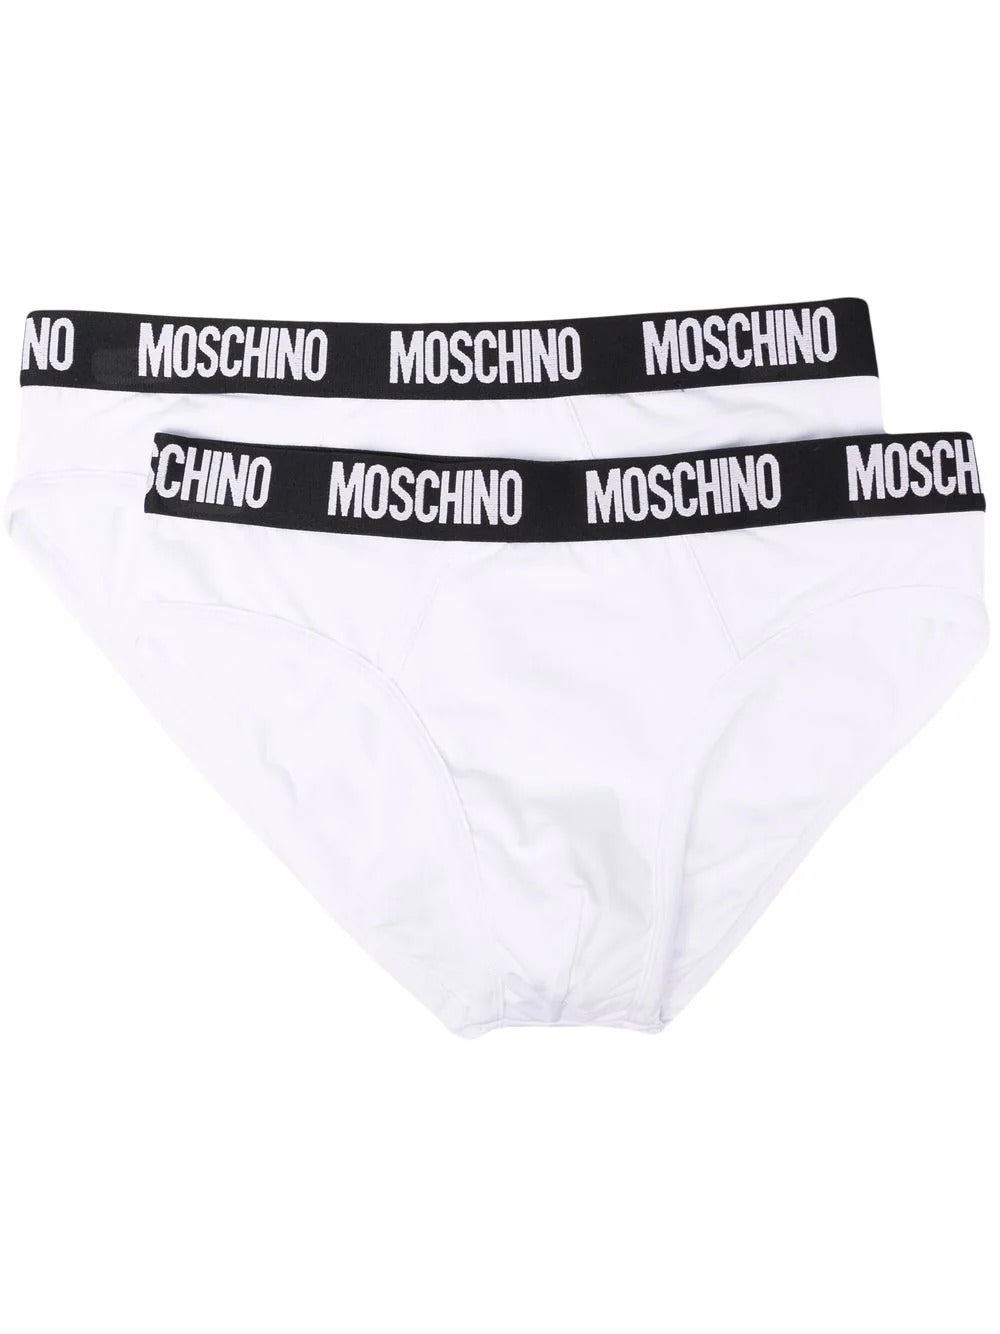 Moschino 2x Slip Bianco Elastico Nero